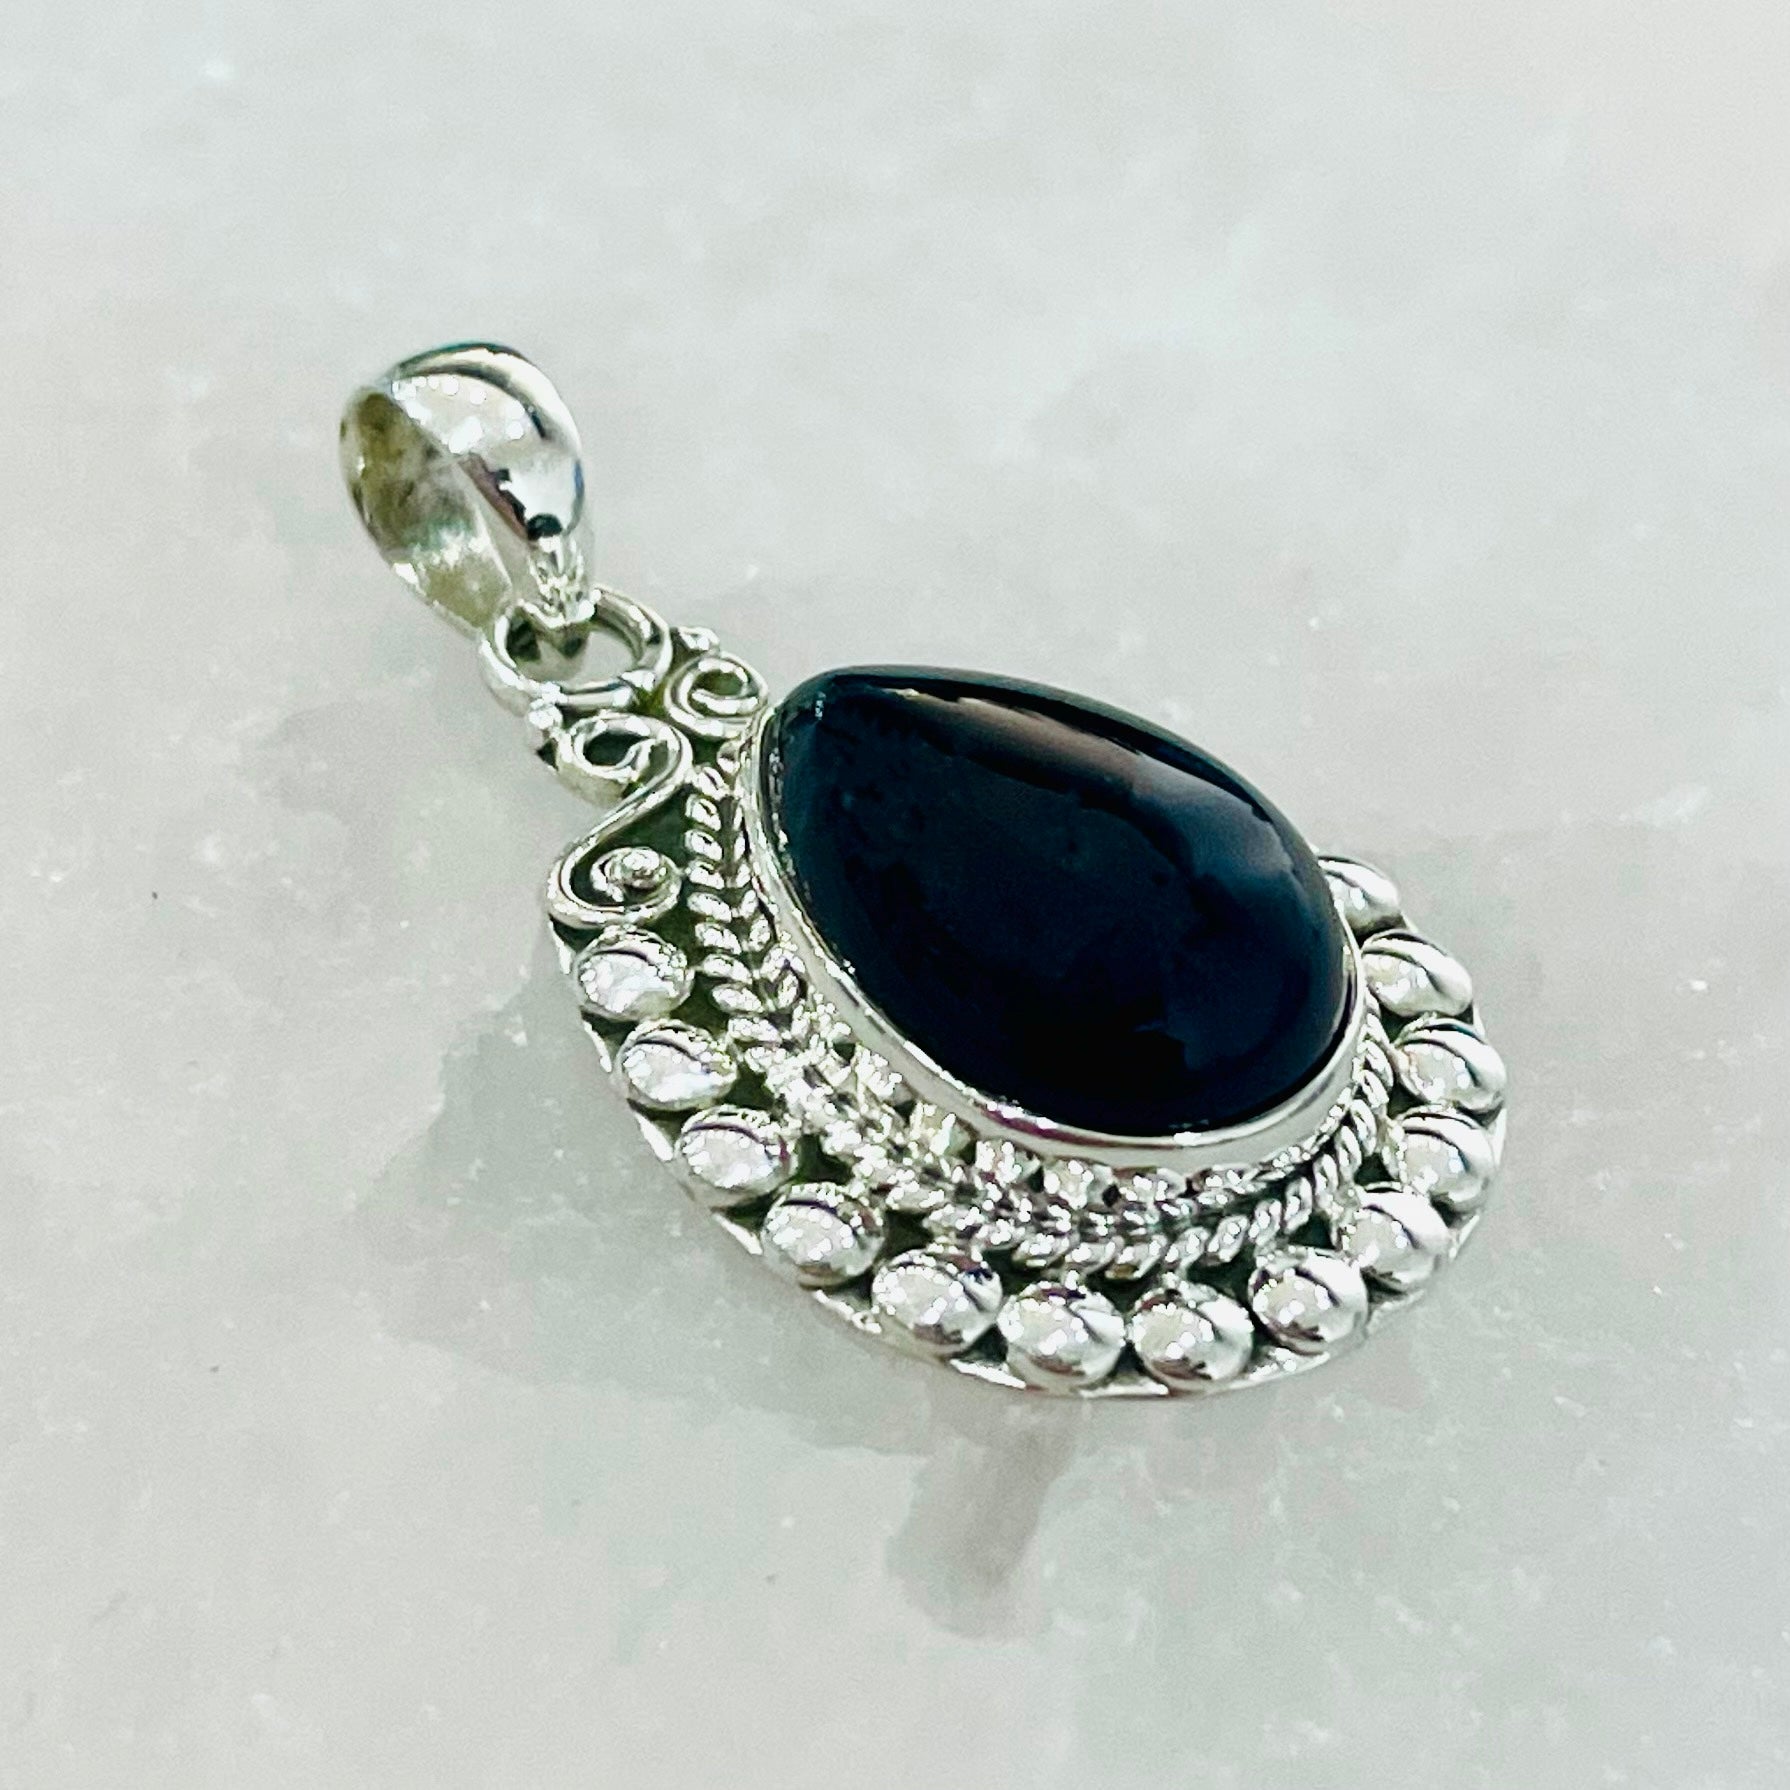 Obsidian boho pendant in sterling silver